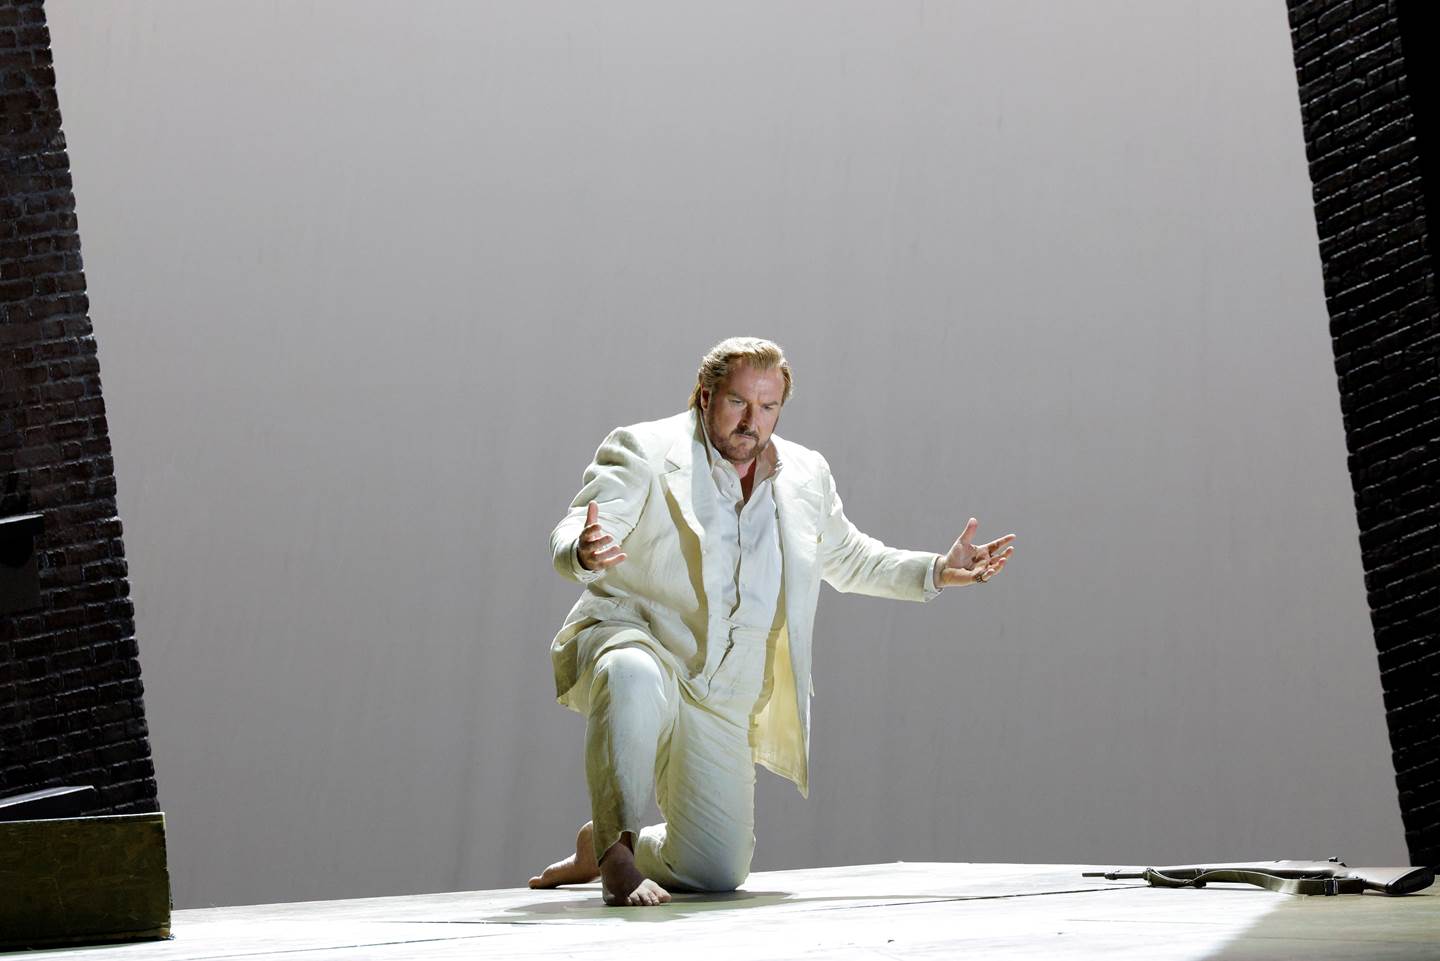 man kneeling on stage singing